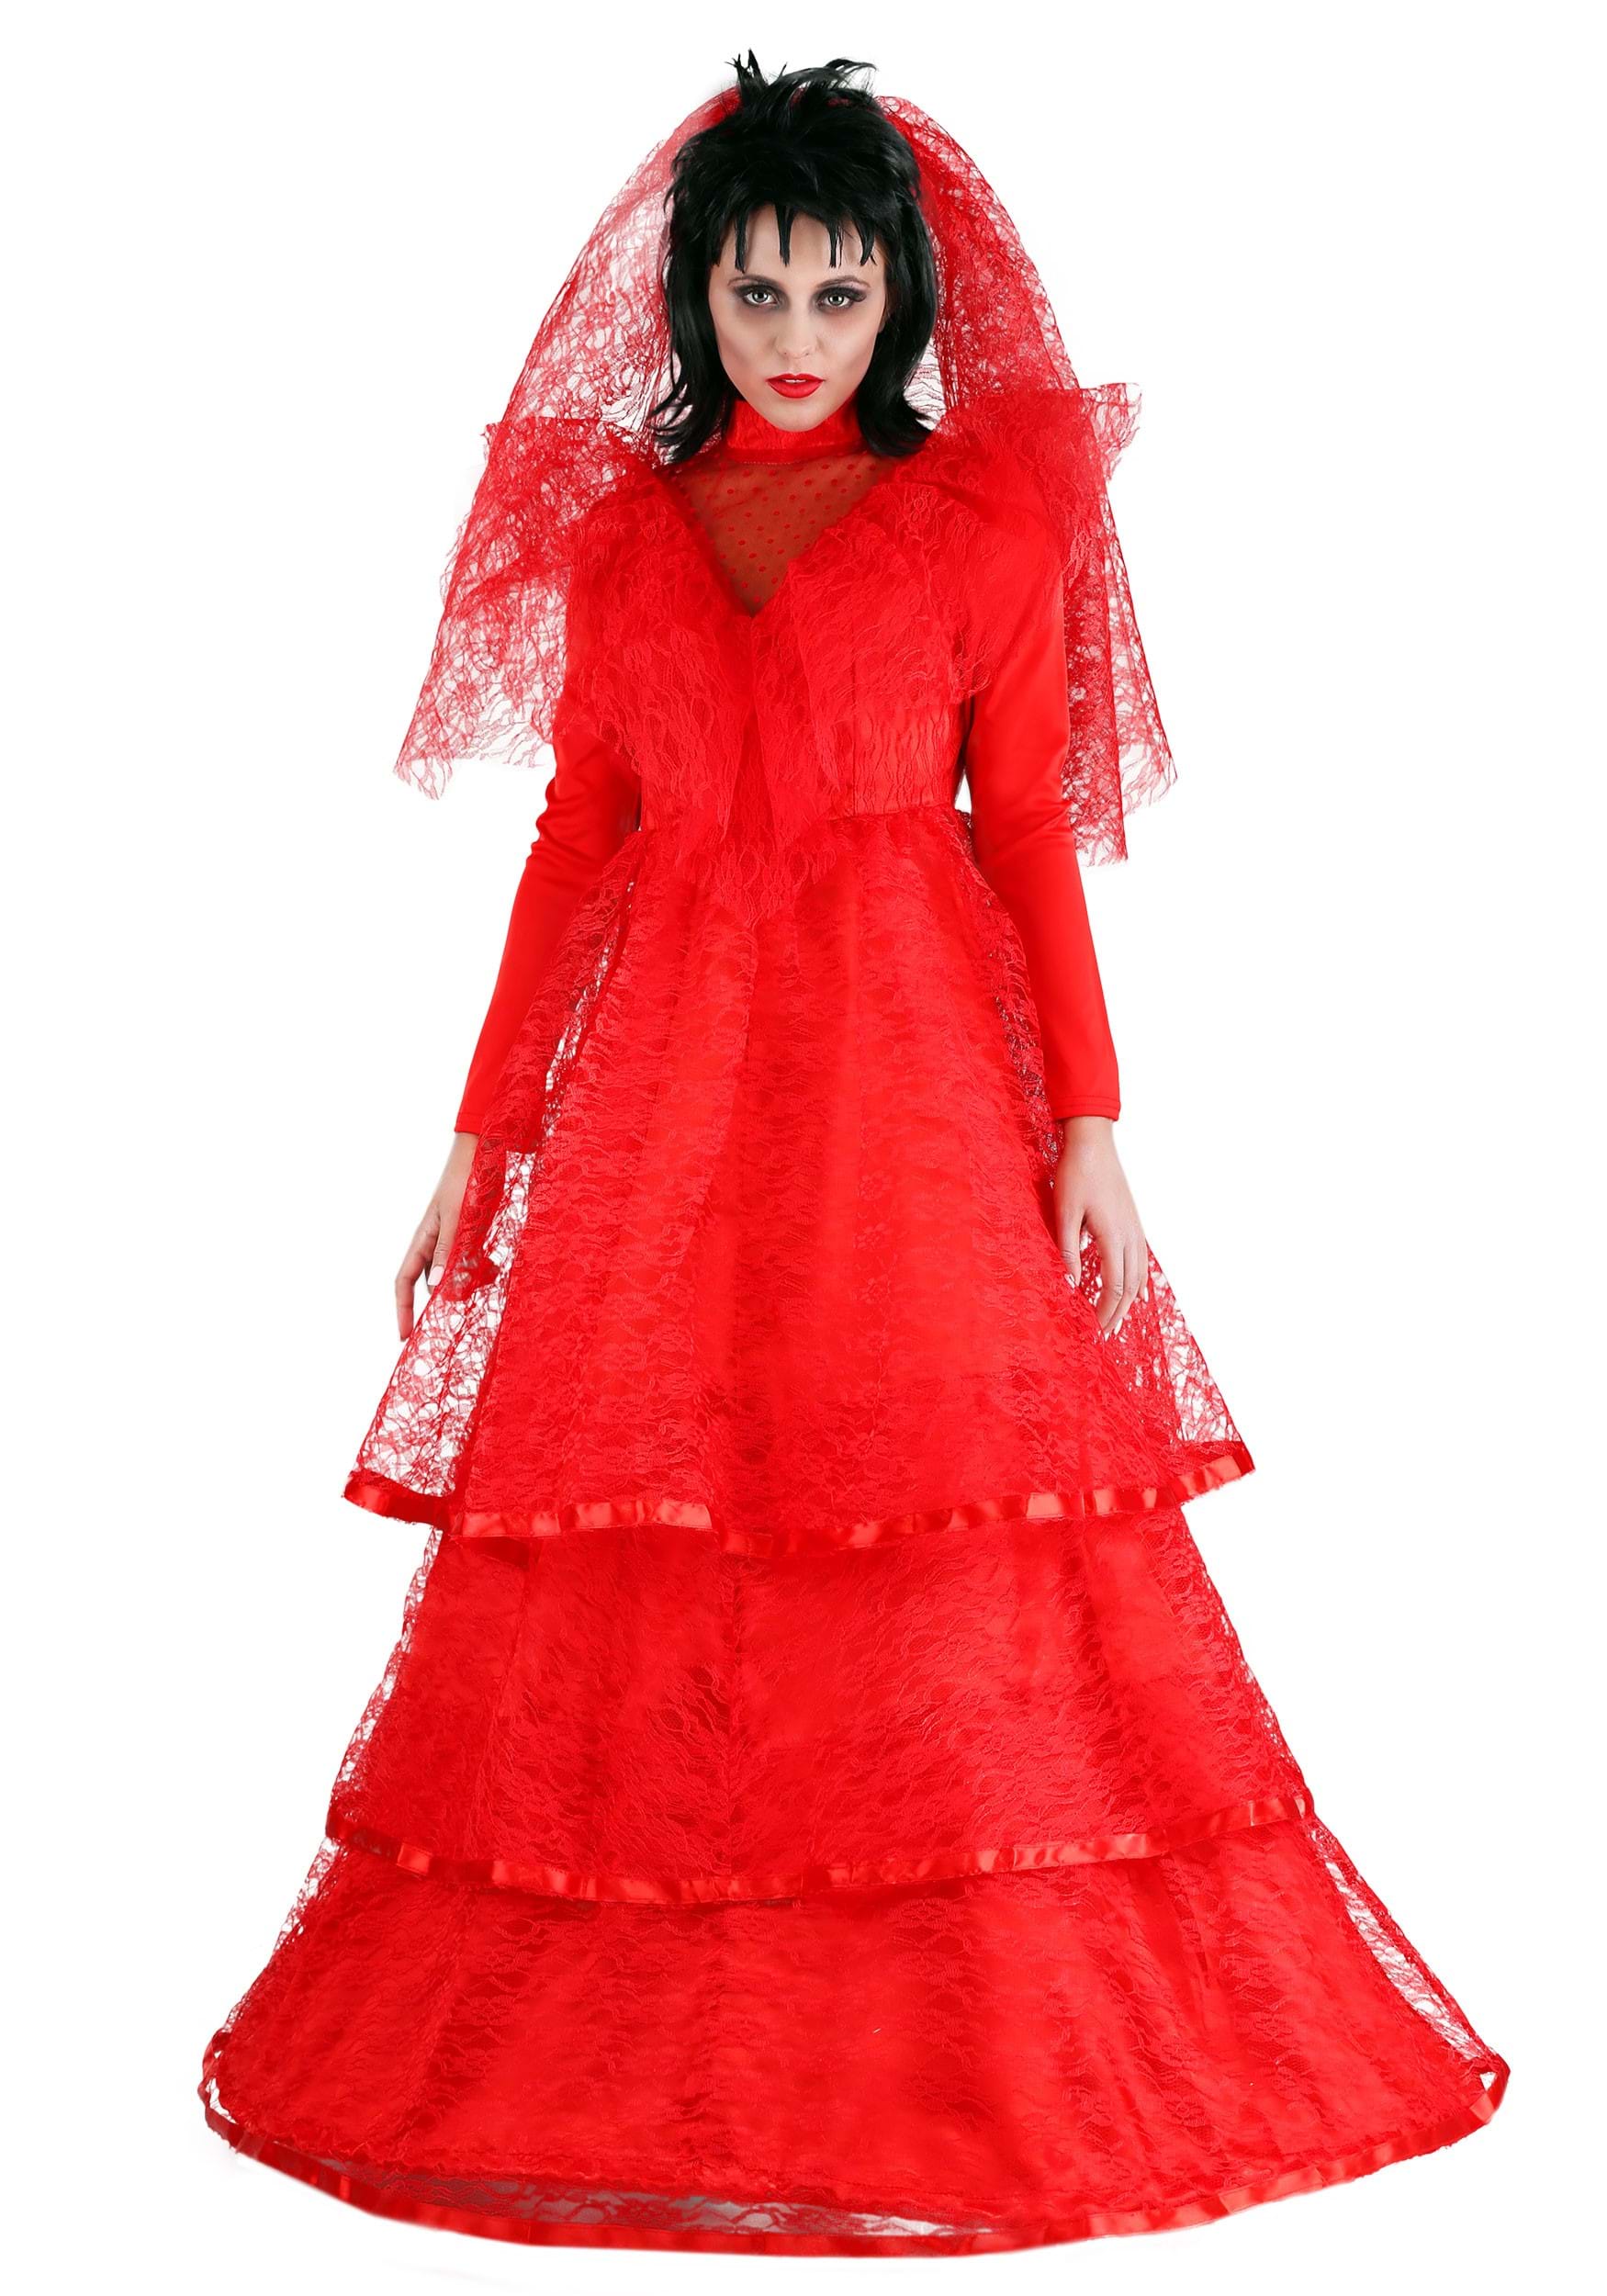 gothic creepy wedding dresses